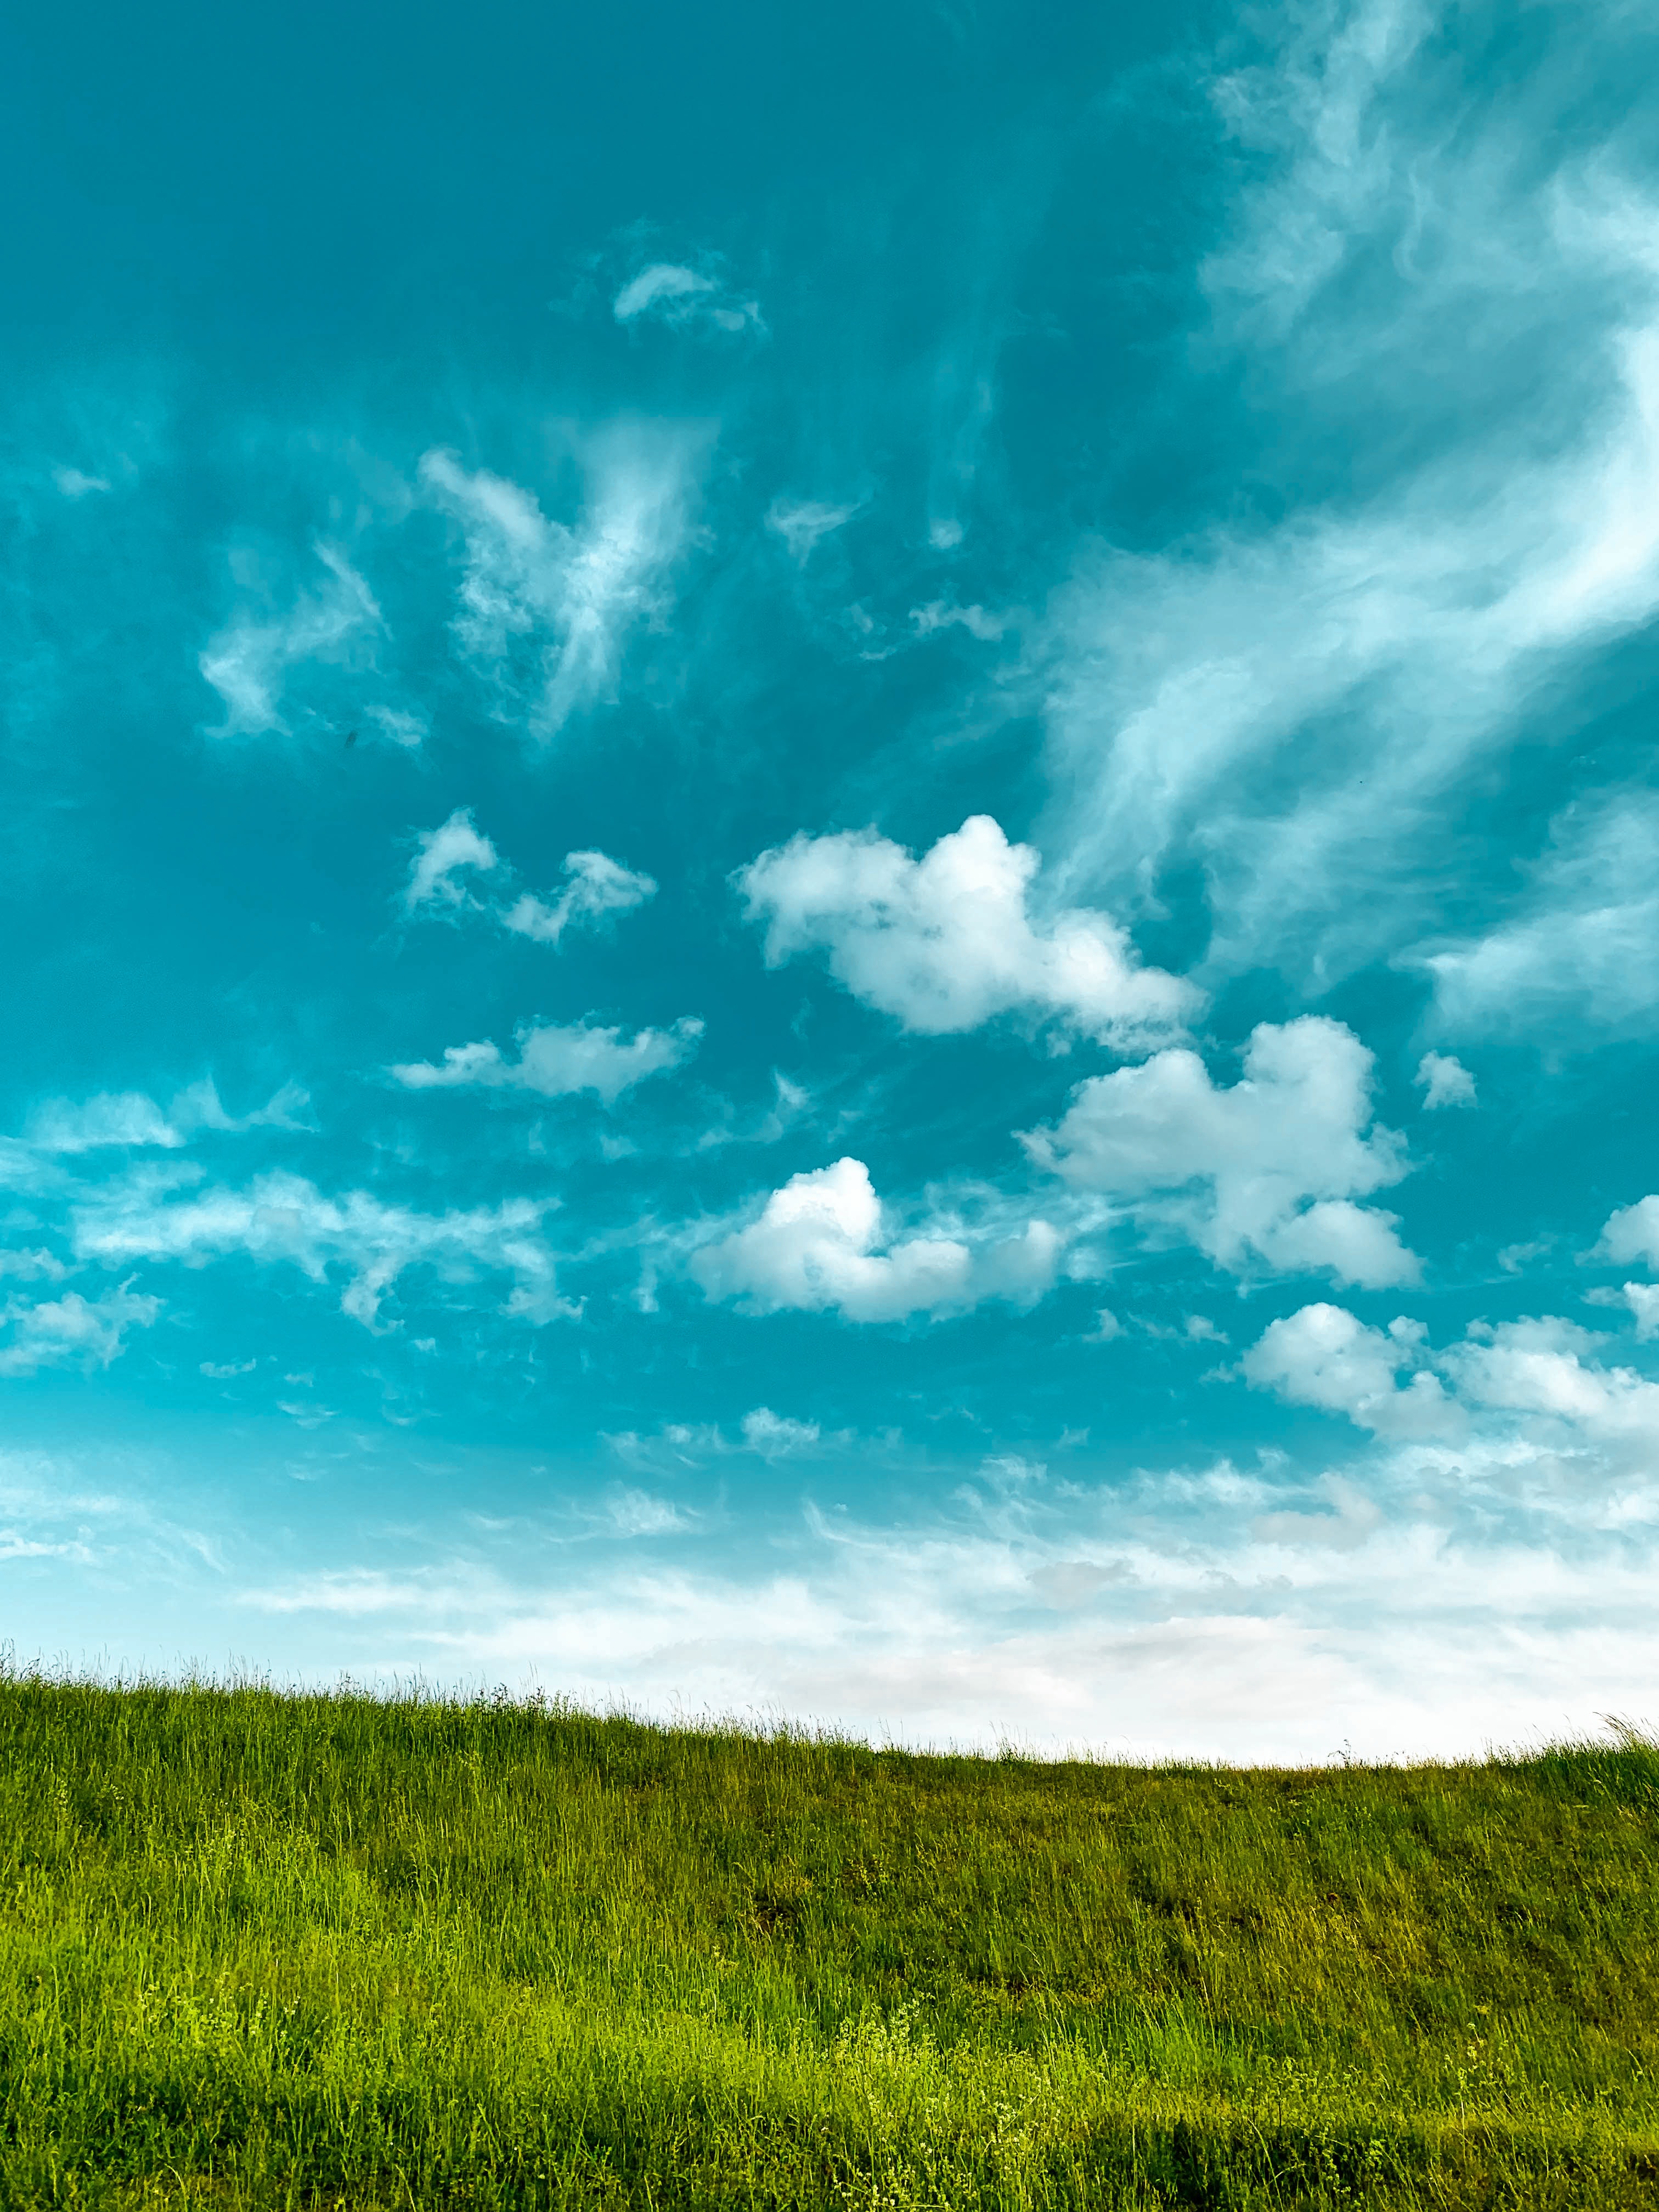 clouds, minimalism, nature, grass, sky